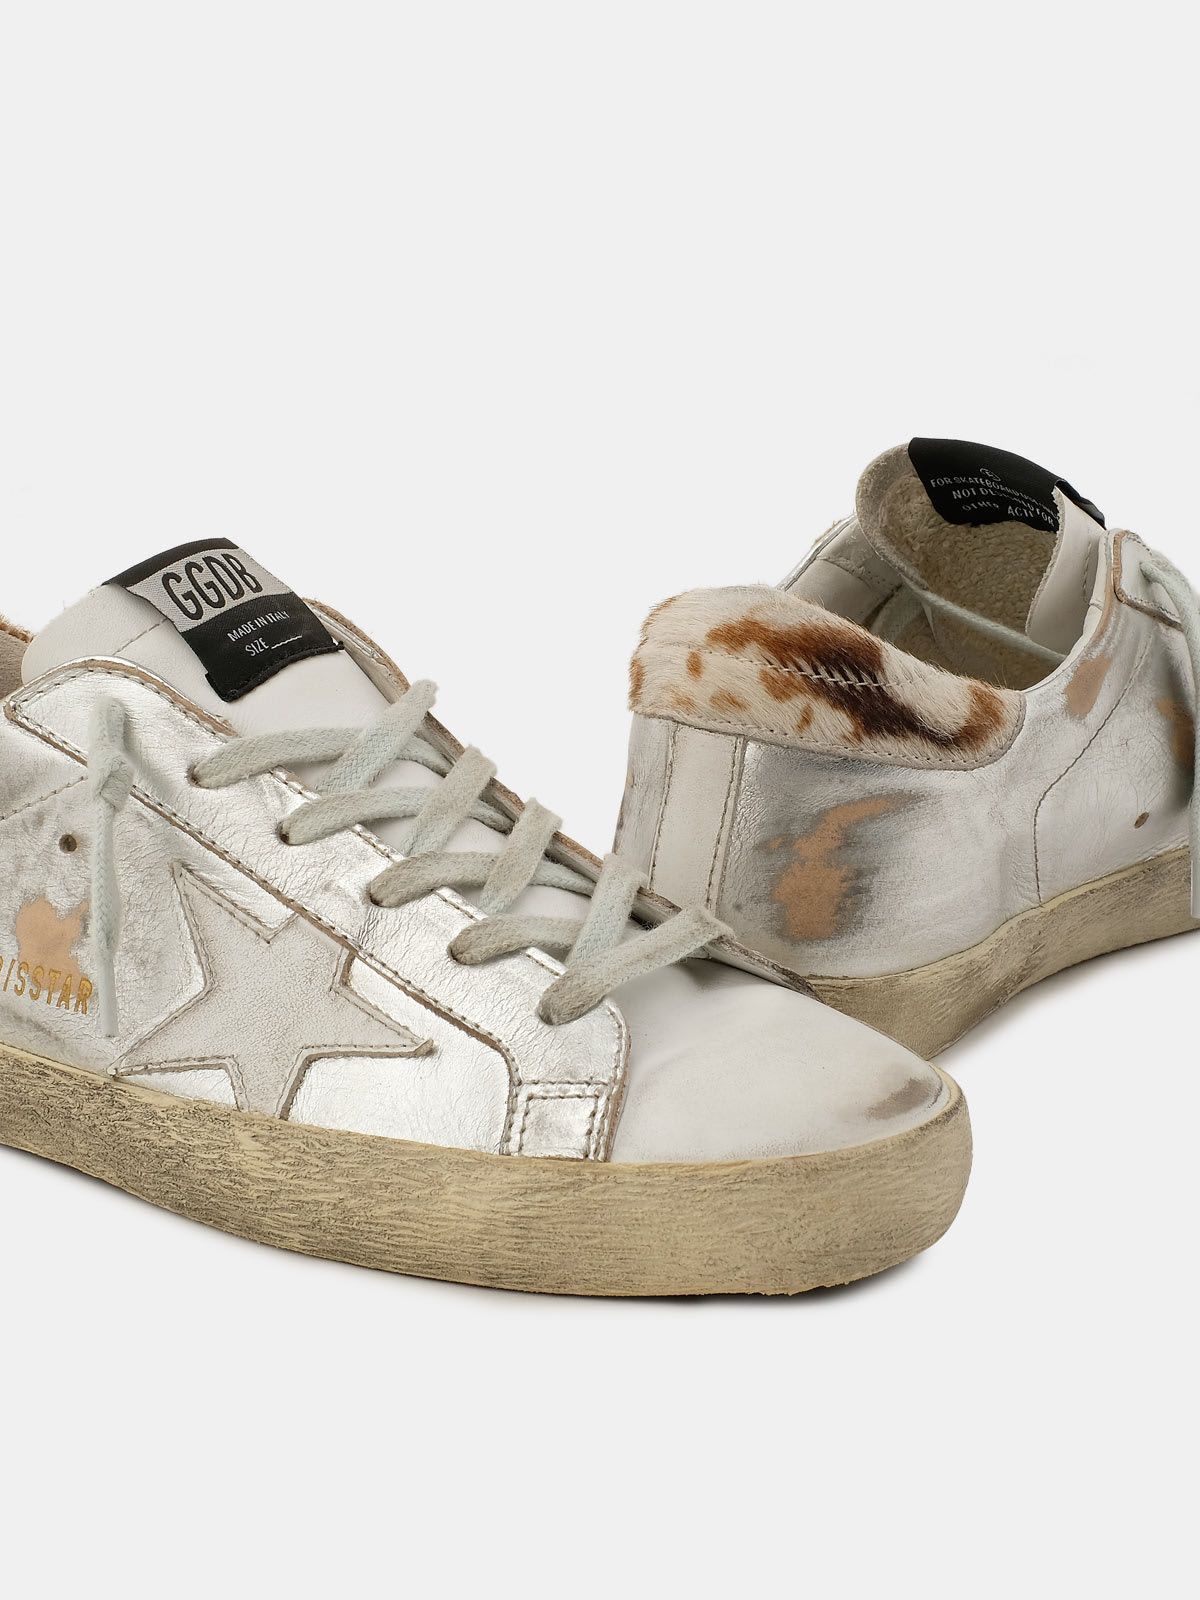 Laminated Super-Star sneakers with animal-print heel tab